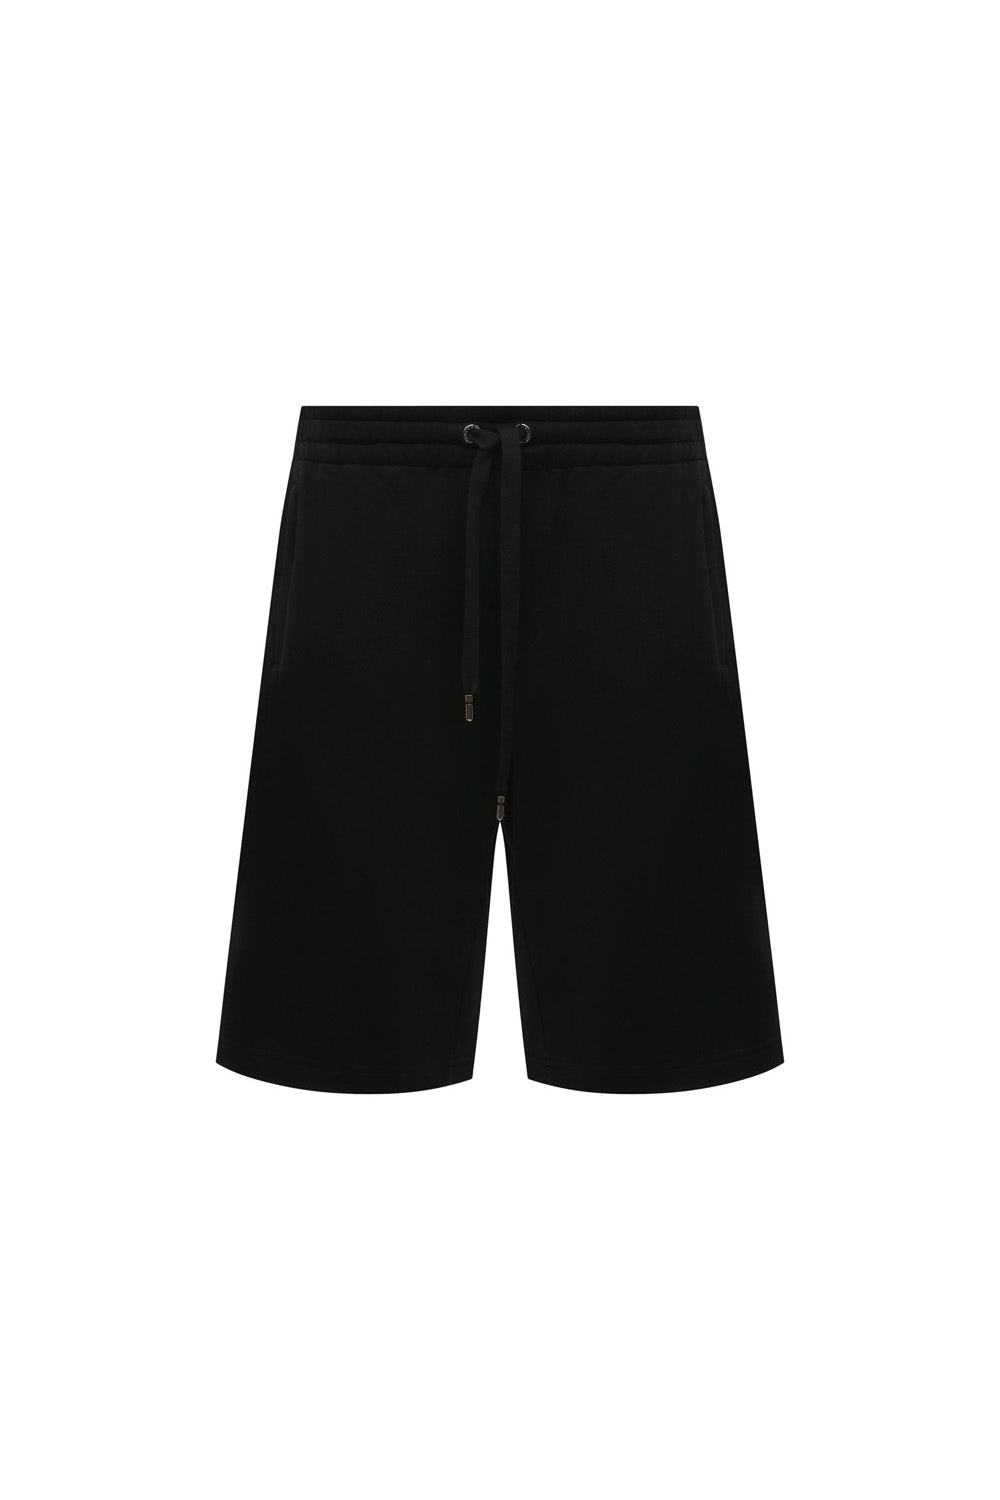 Dolce & Gabbana logo-patch track shorts